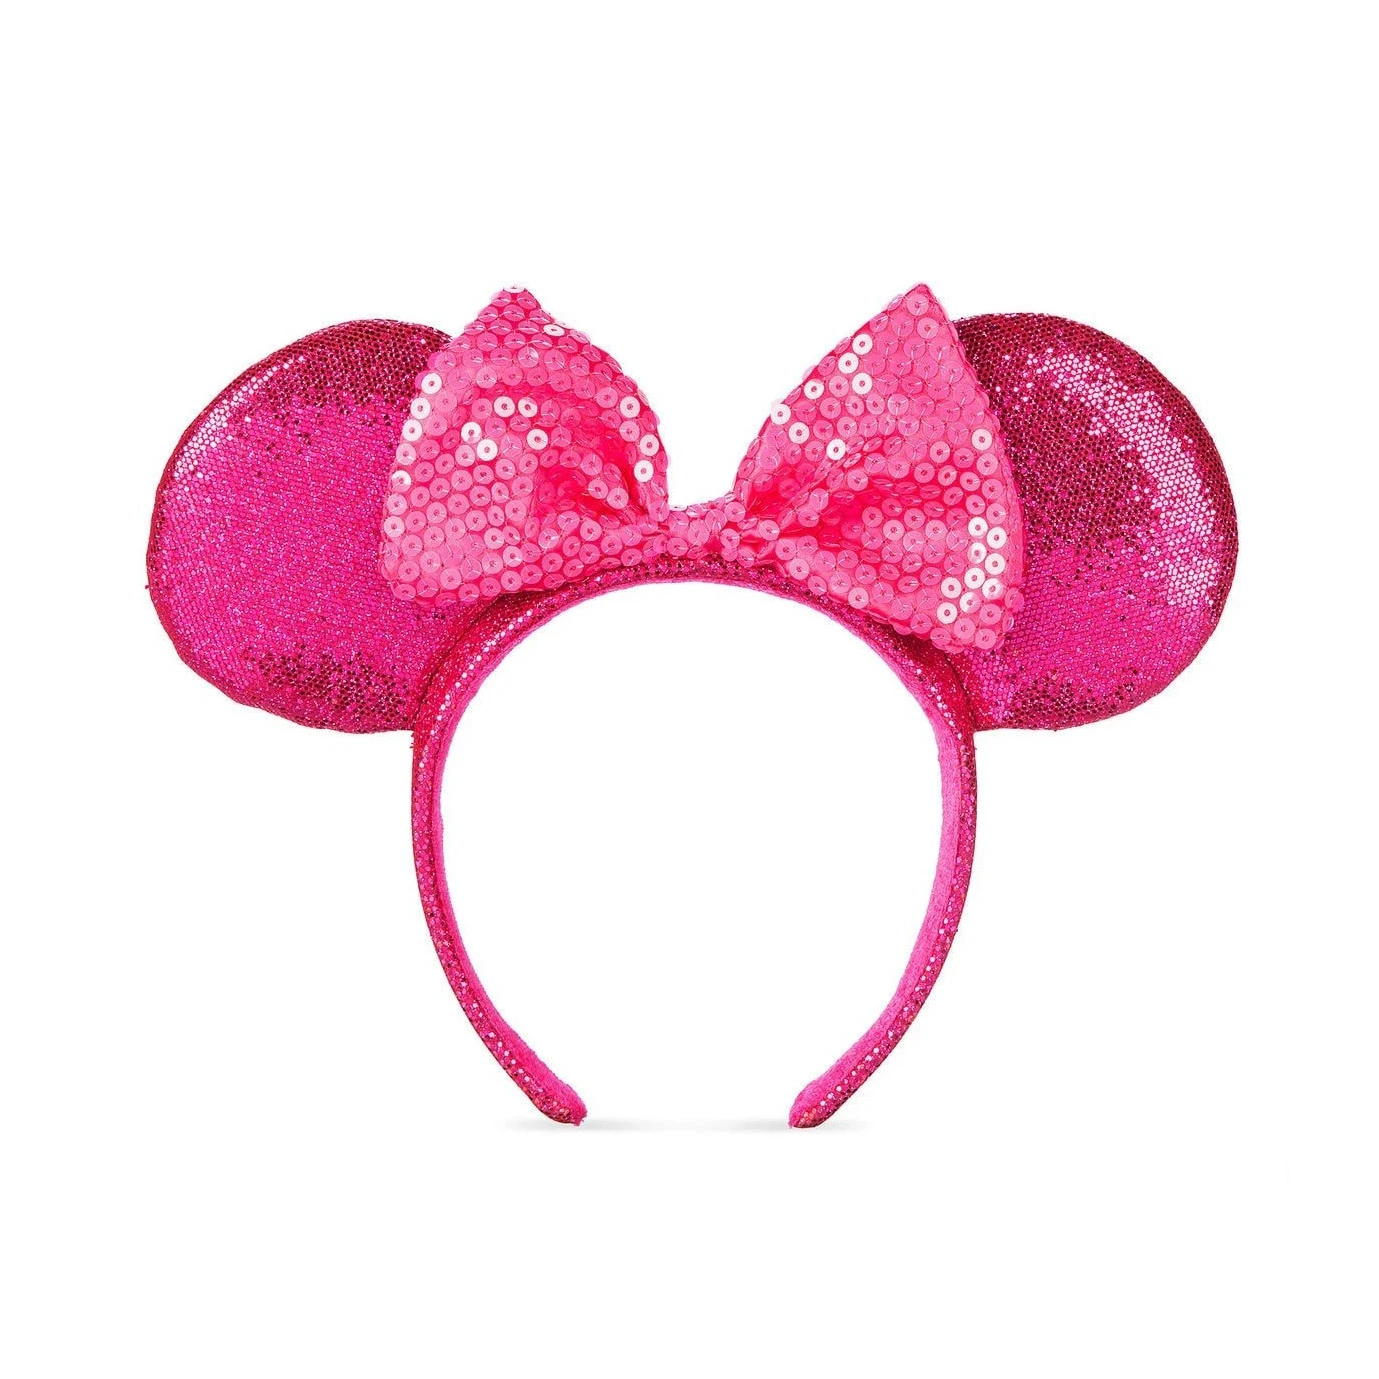 item Disney Parks - Minnie Mouse Ears Headband - Imagination Pink pink